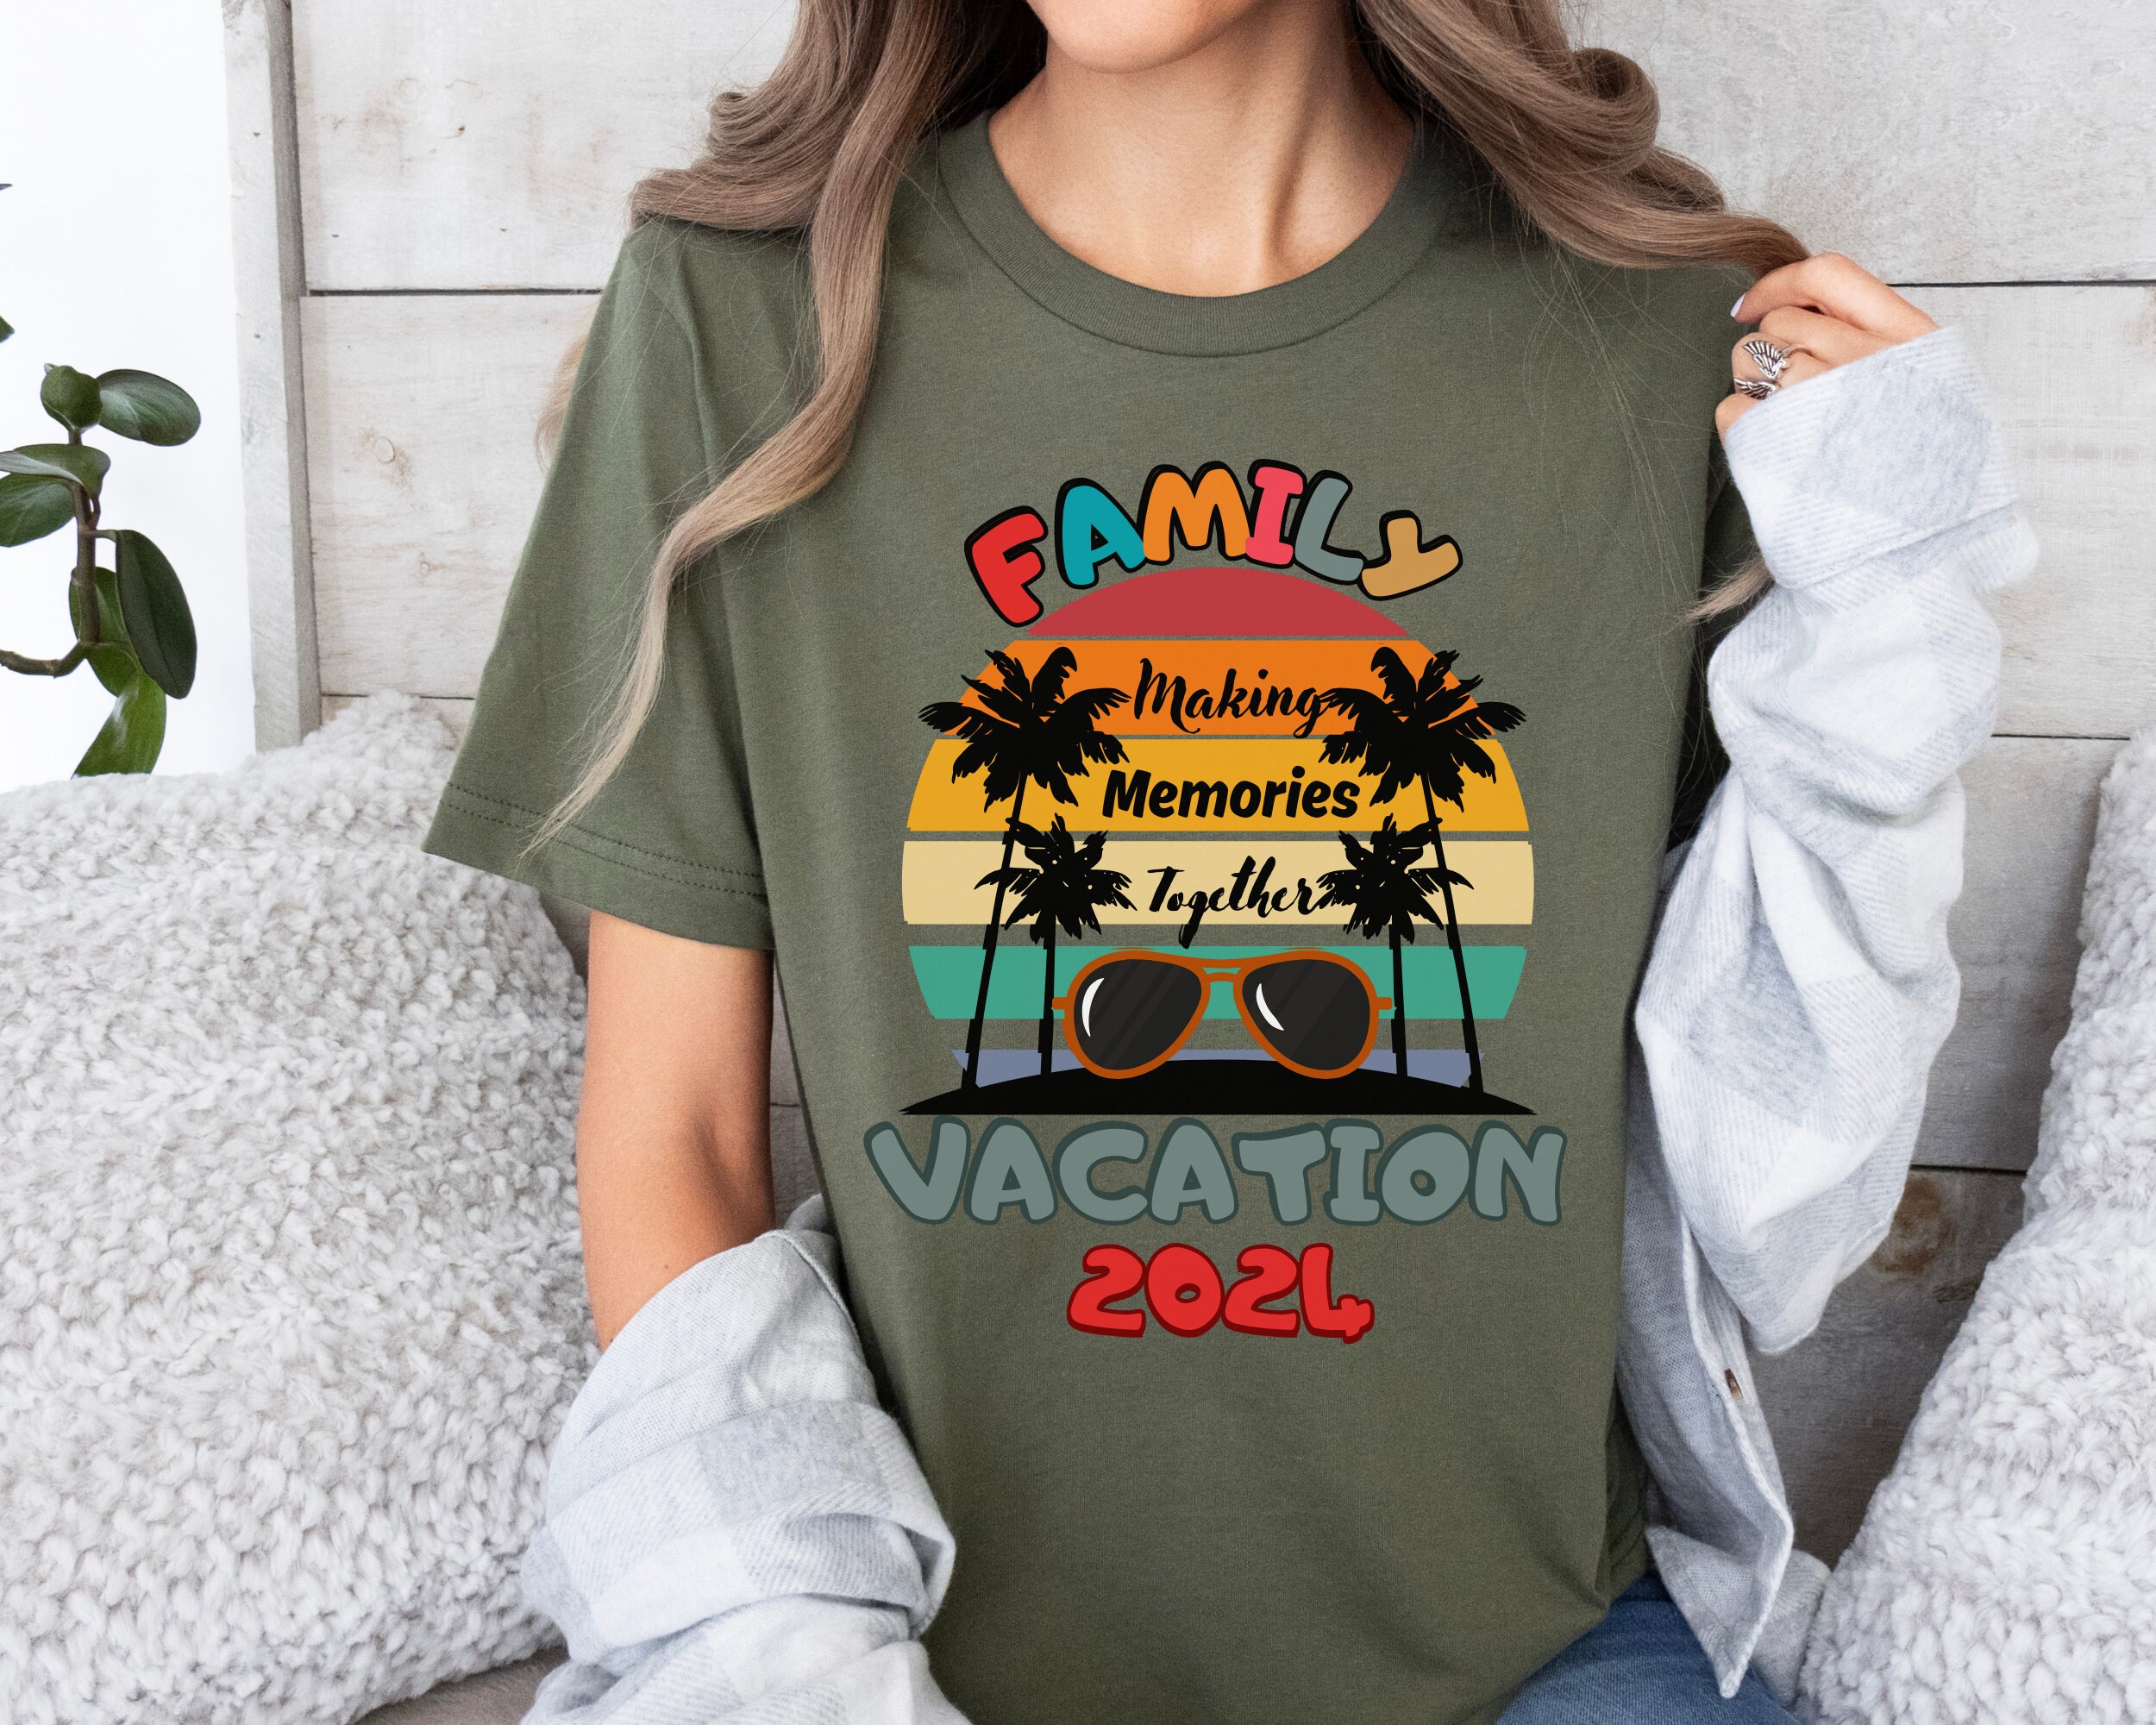 Discover Family Vacation 2024 Shirt, Making Memories together family Tshirt, Family matching shirt, Family Beach trip shirt, Family Vacation Tee